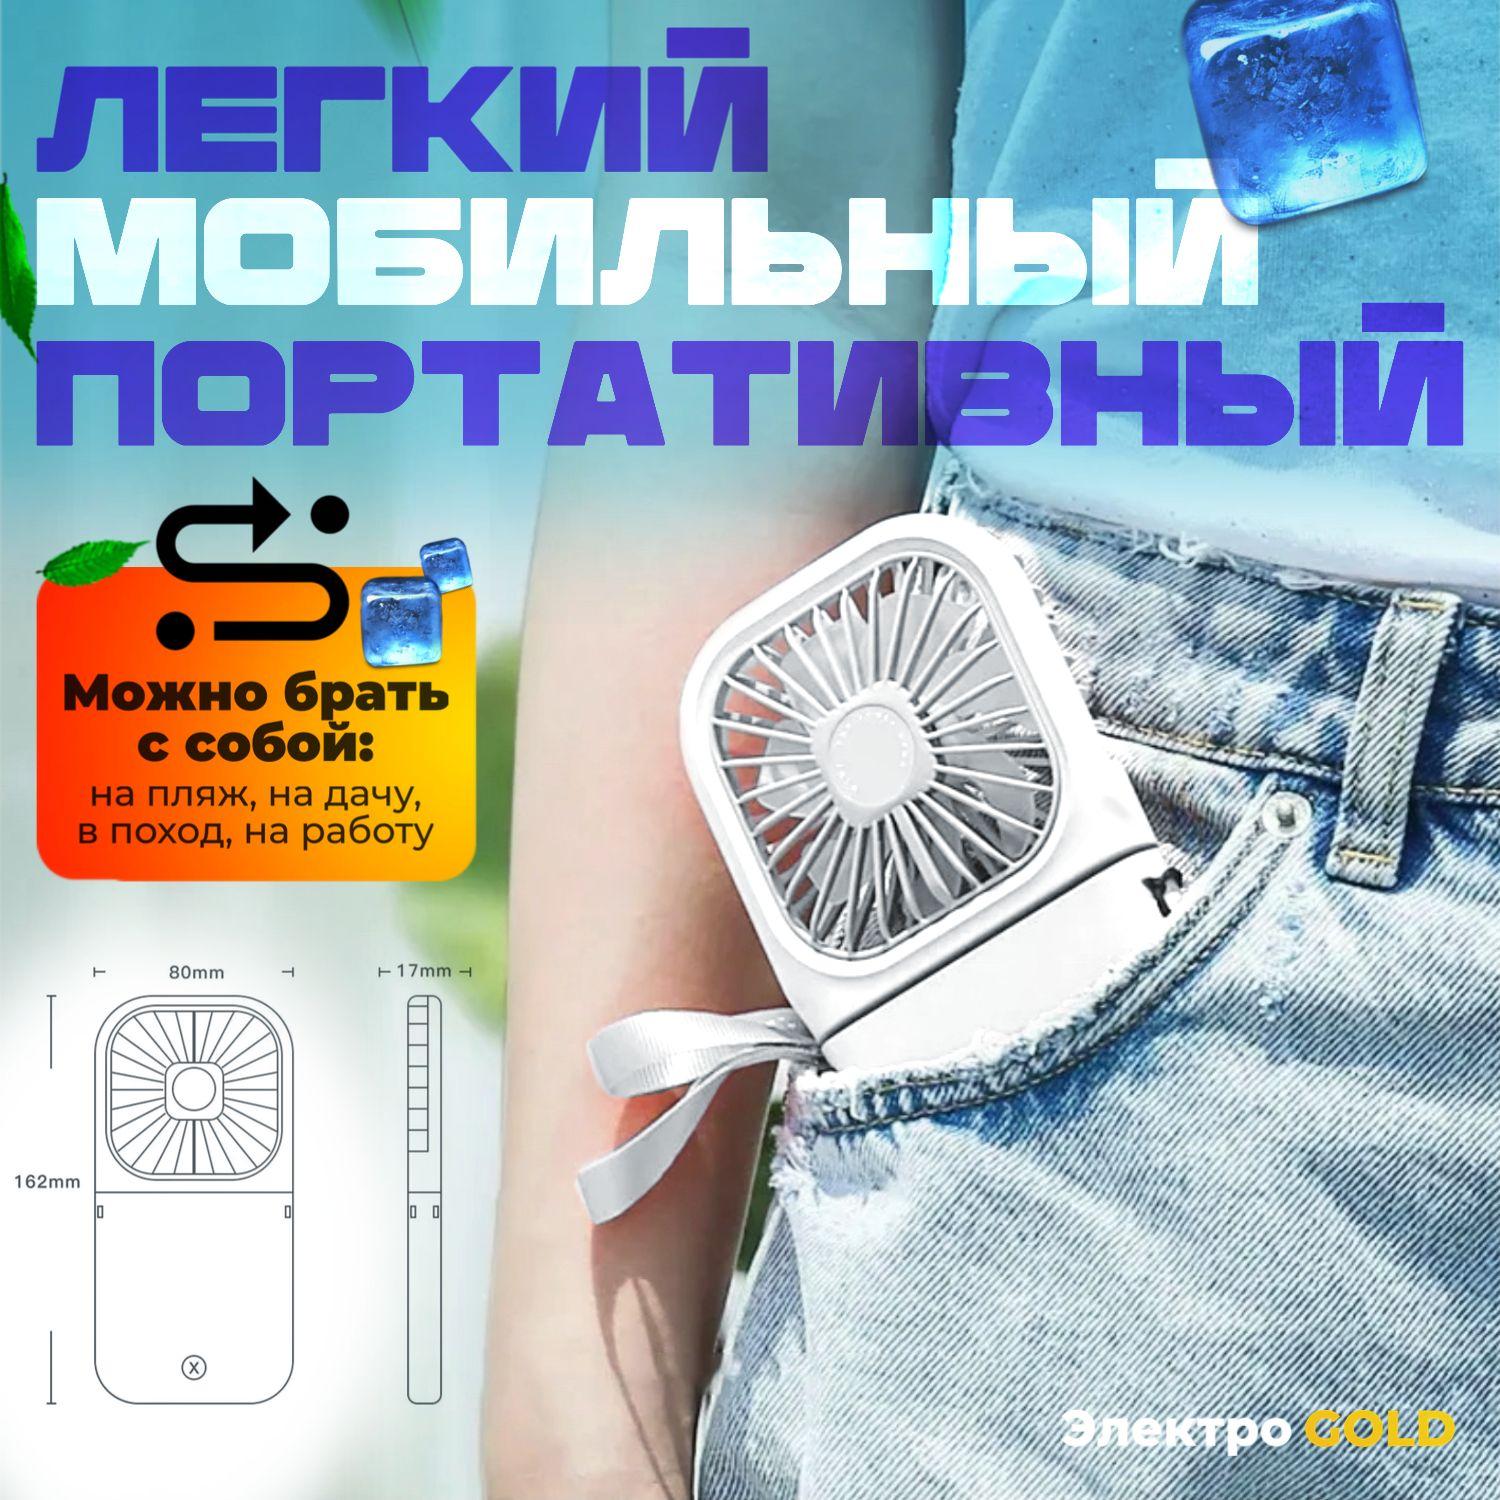 https://cdn1.ozone.ru/s3/multimedia-1-k/7040585036.jpg